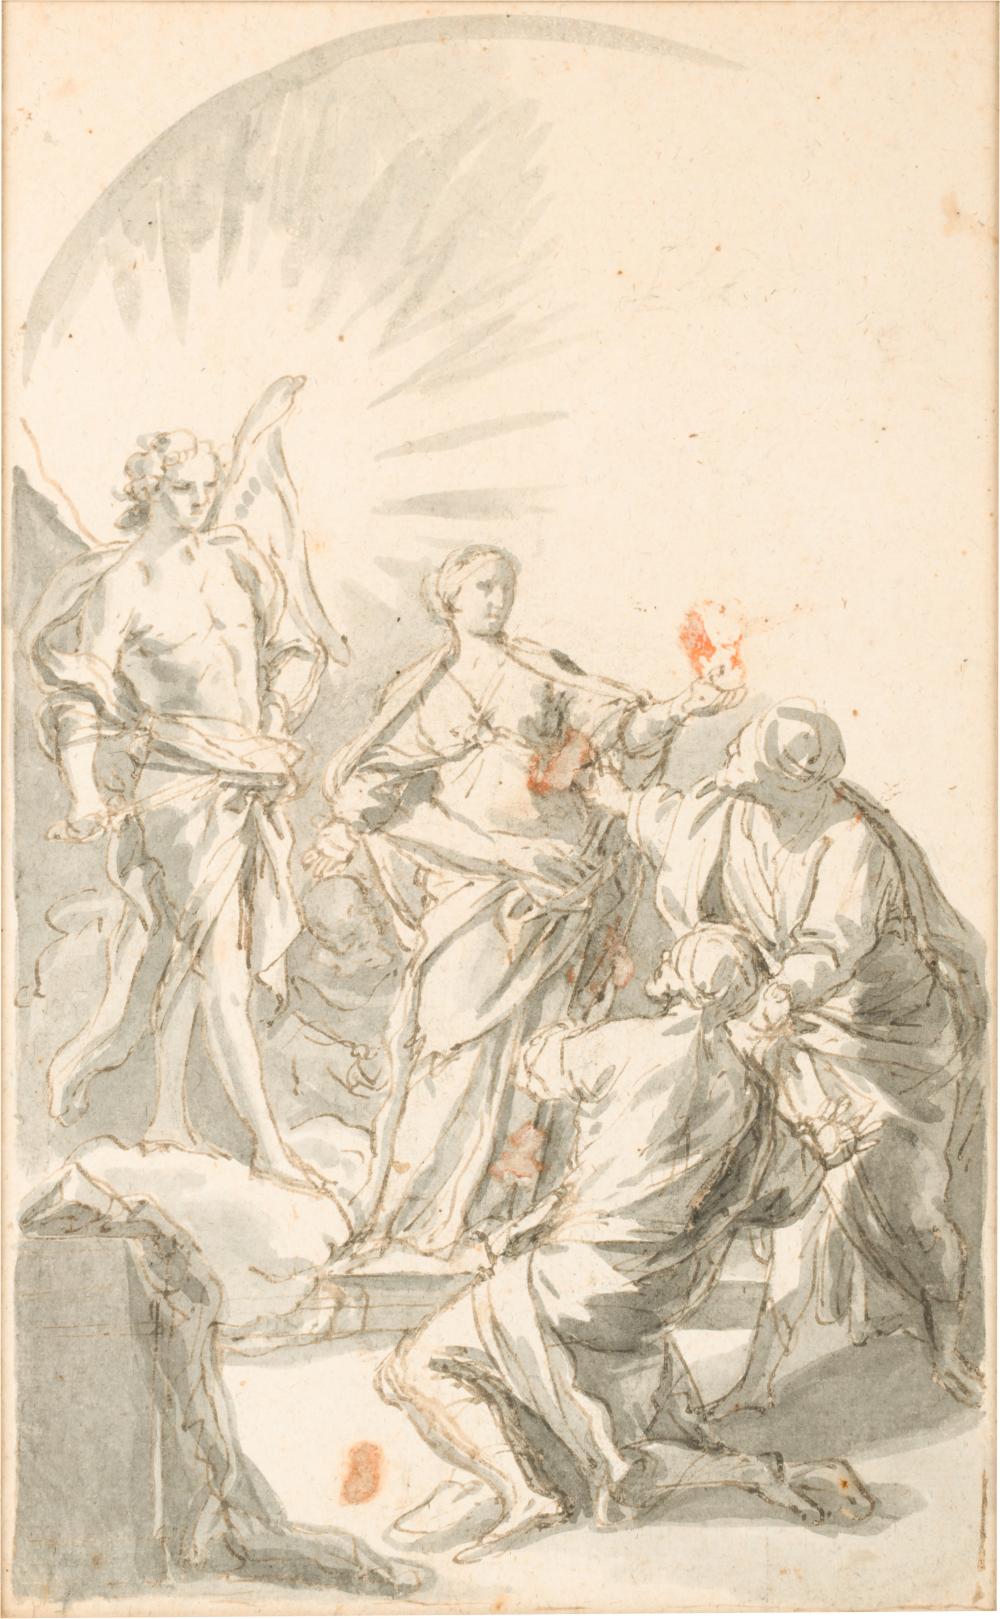 FRANCESCO SOLIMENA, ITALIAN 1657-1747,